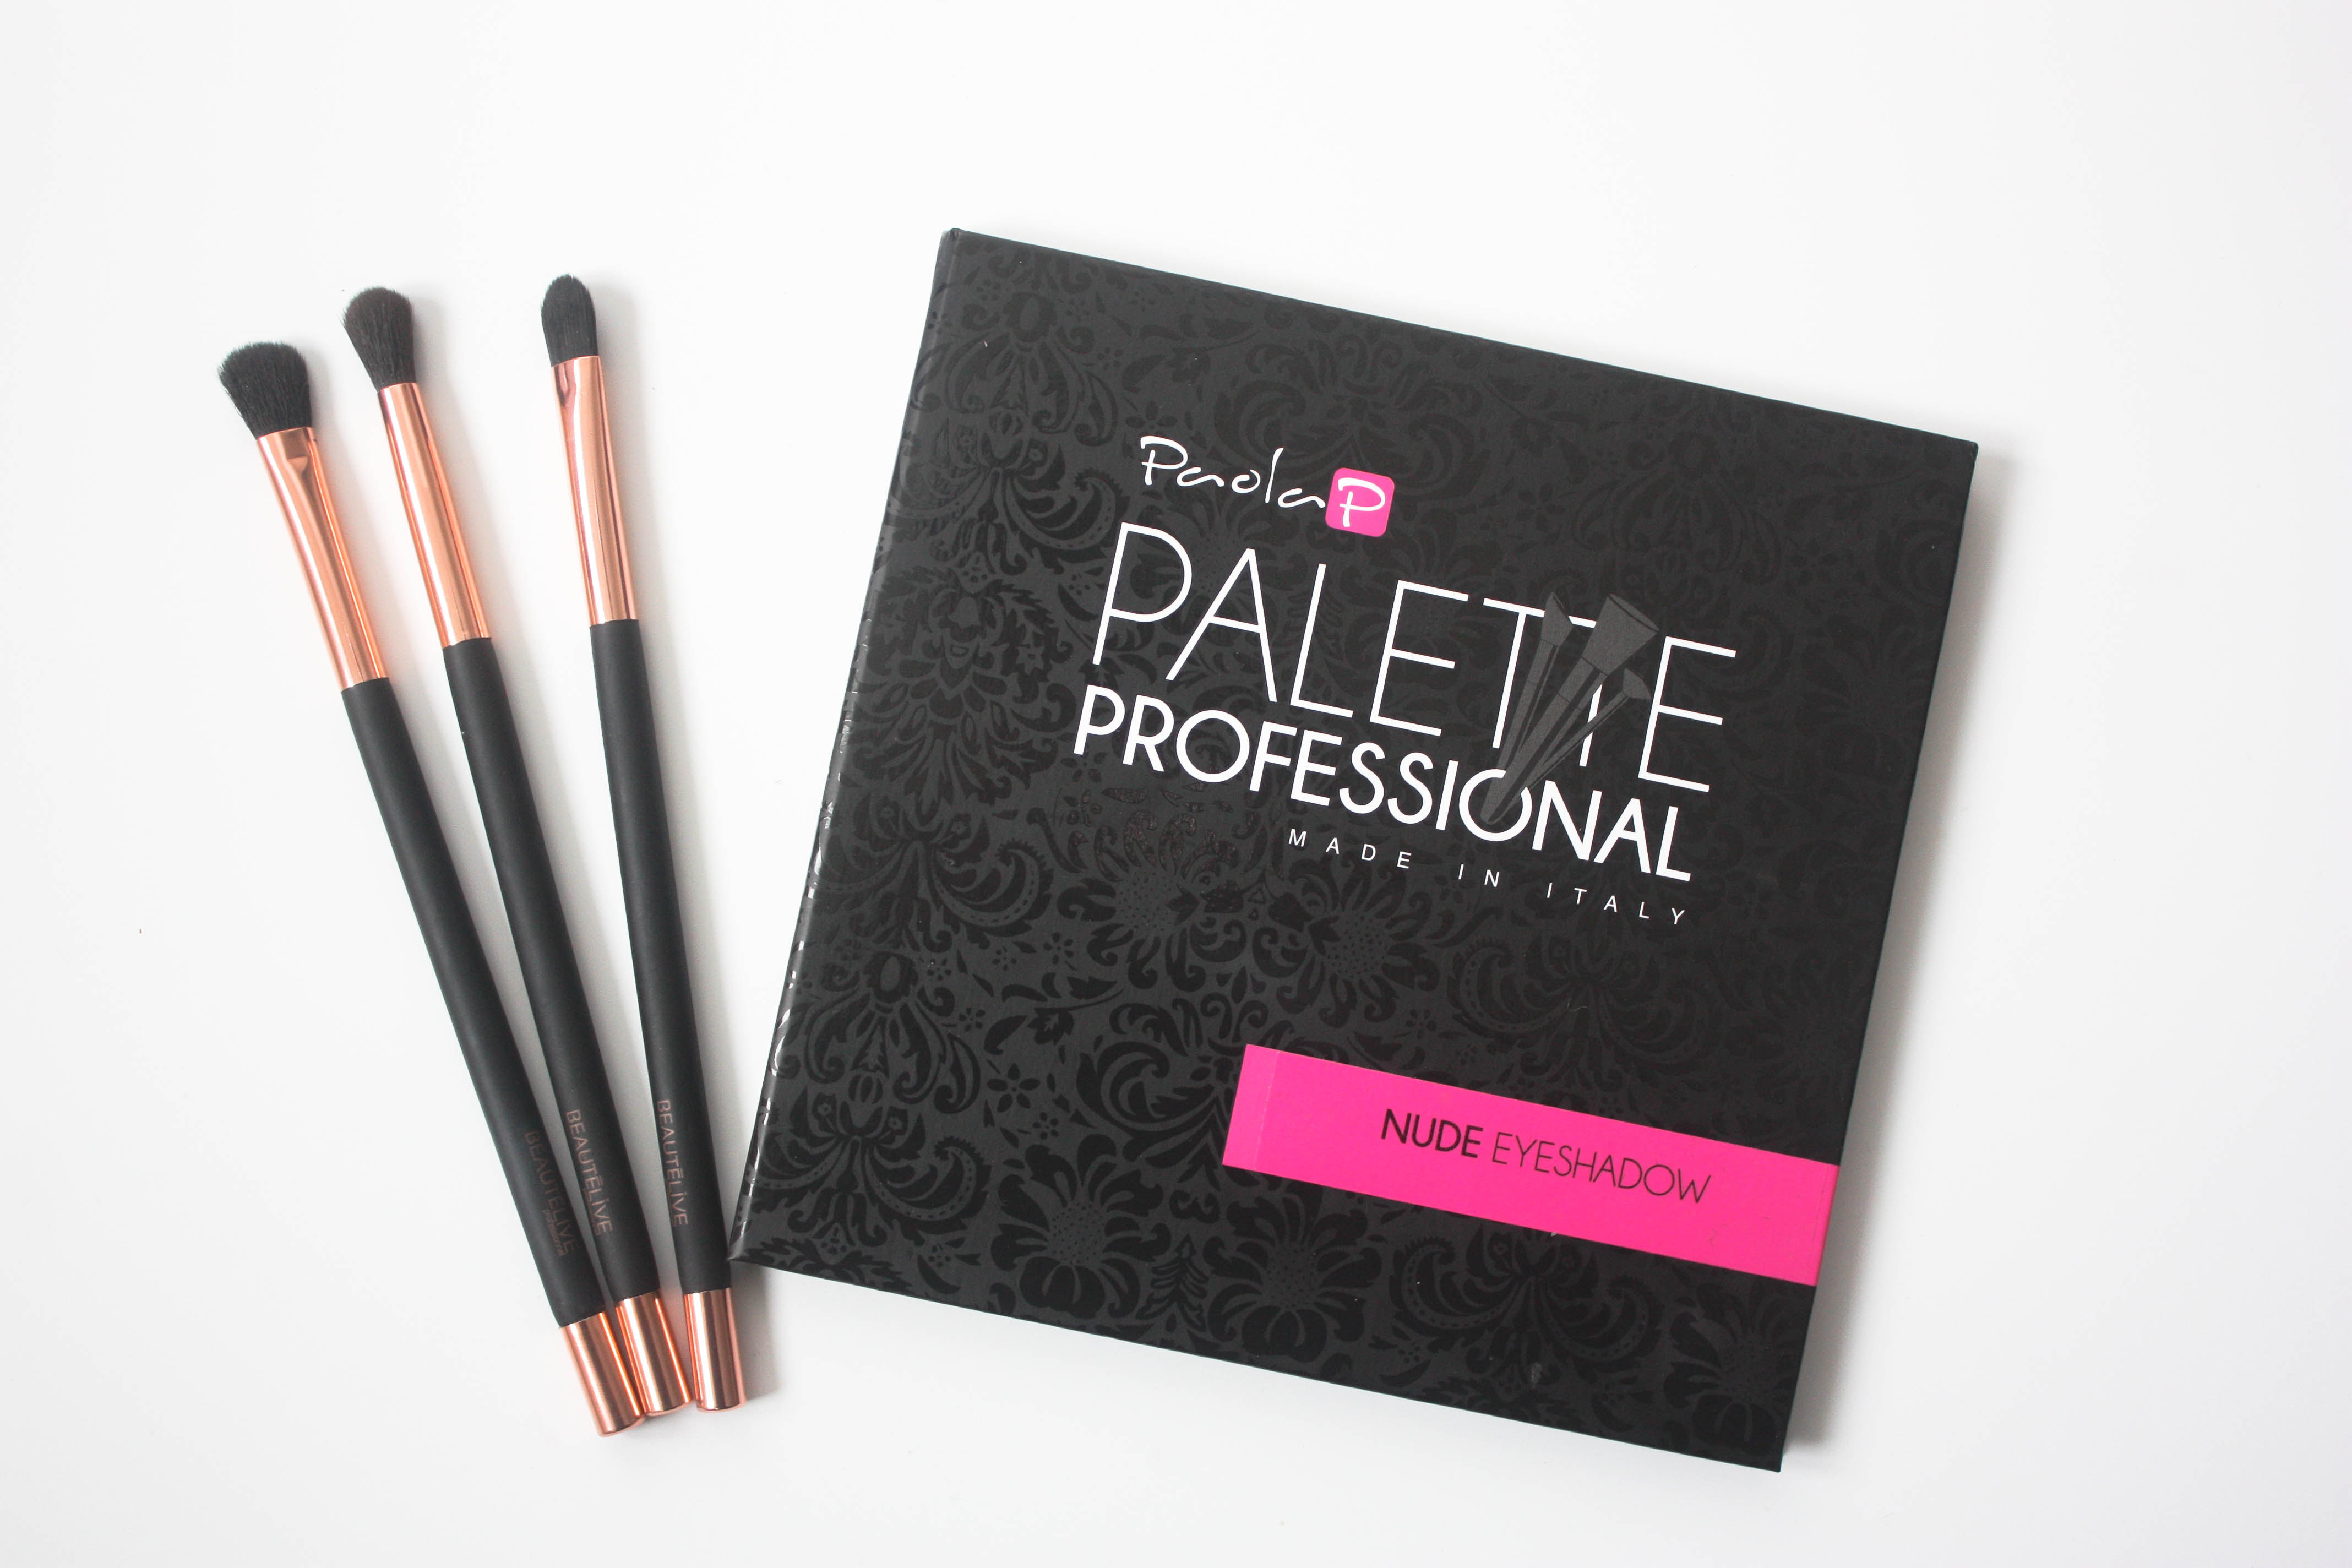 Palette Professional PaolaP